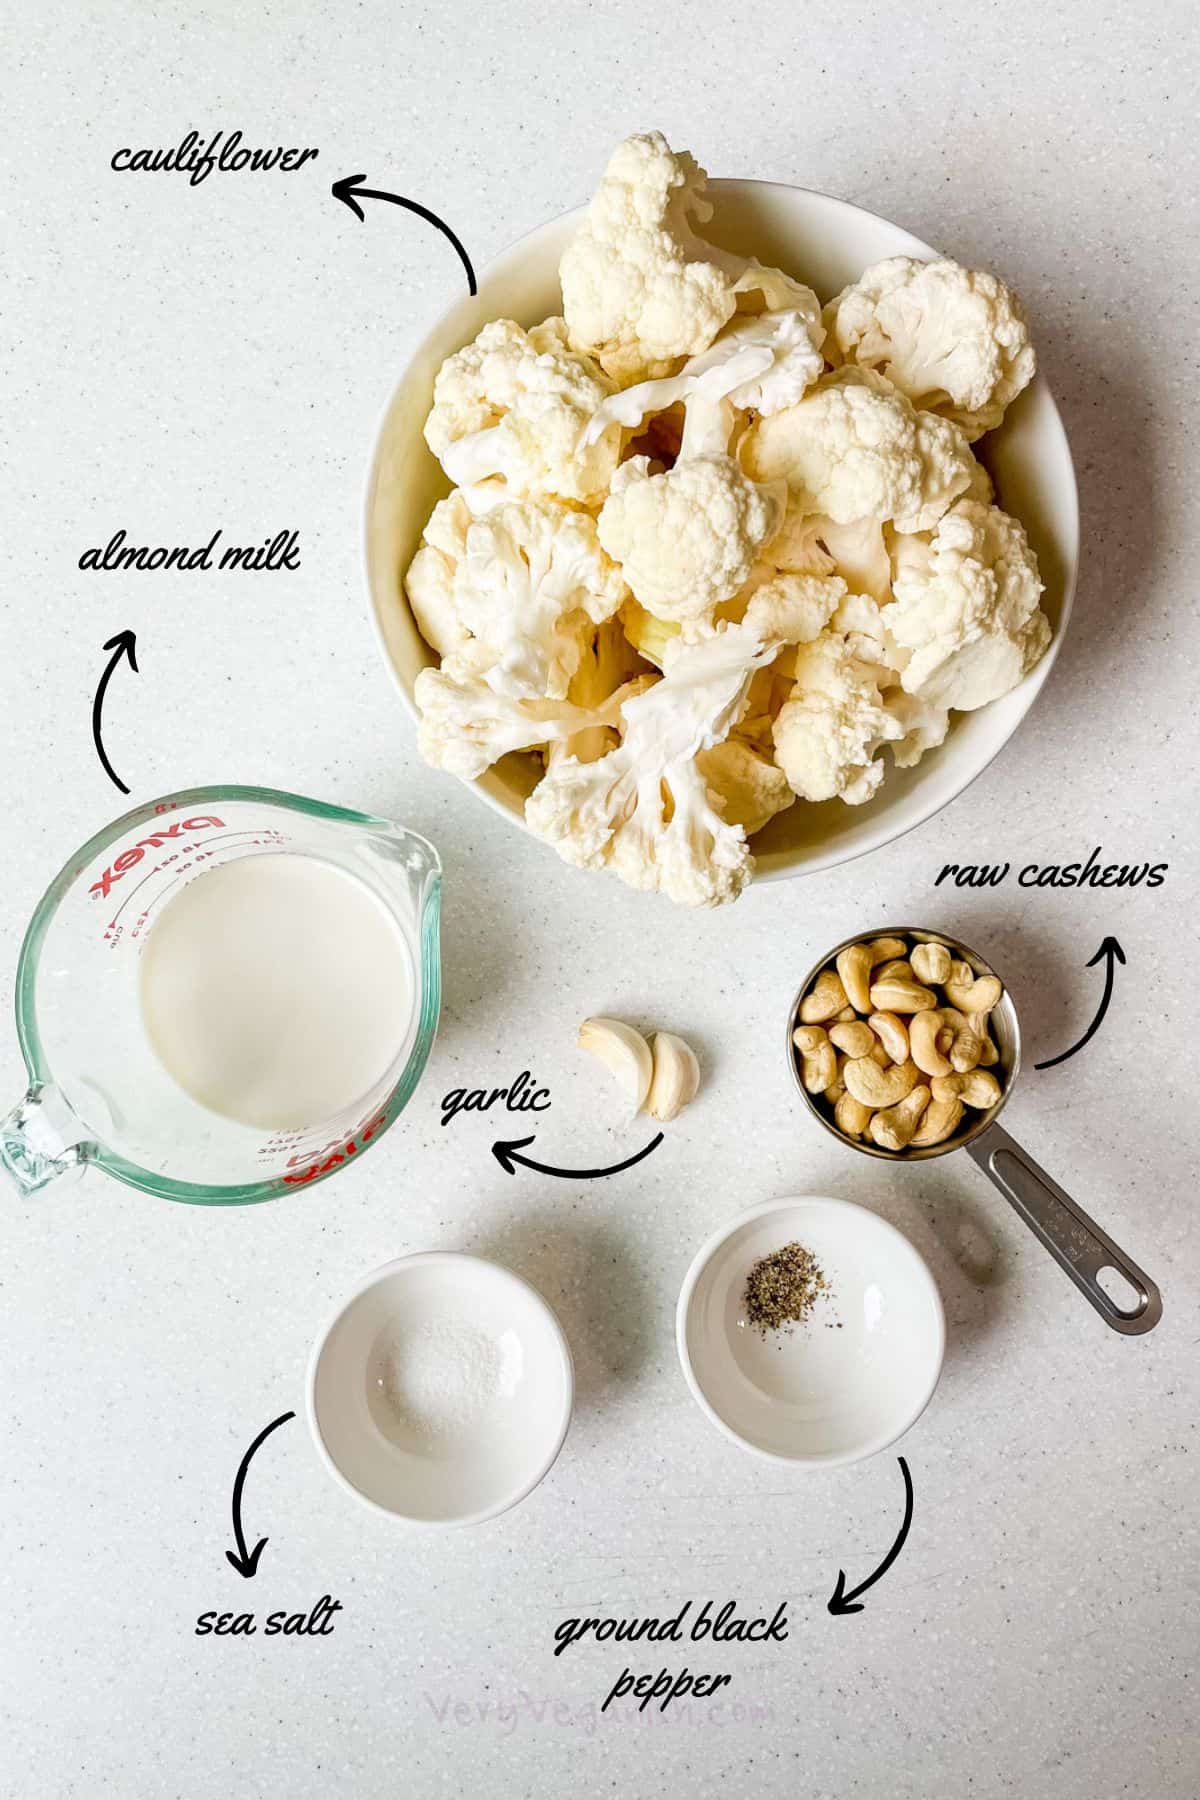 prepped ingredients laid out: cauliflower florets, almond milk, raw cashews, garlic, sea salt and ground black pepper